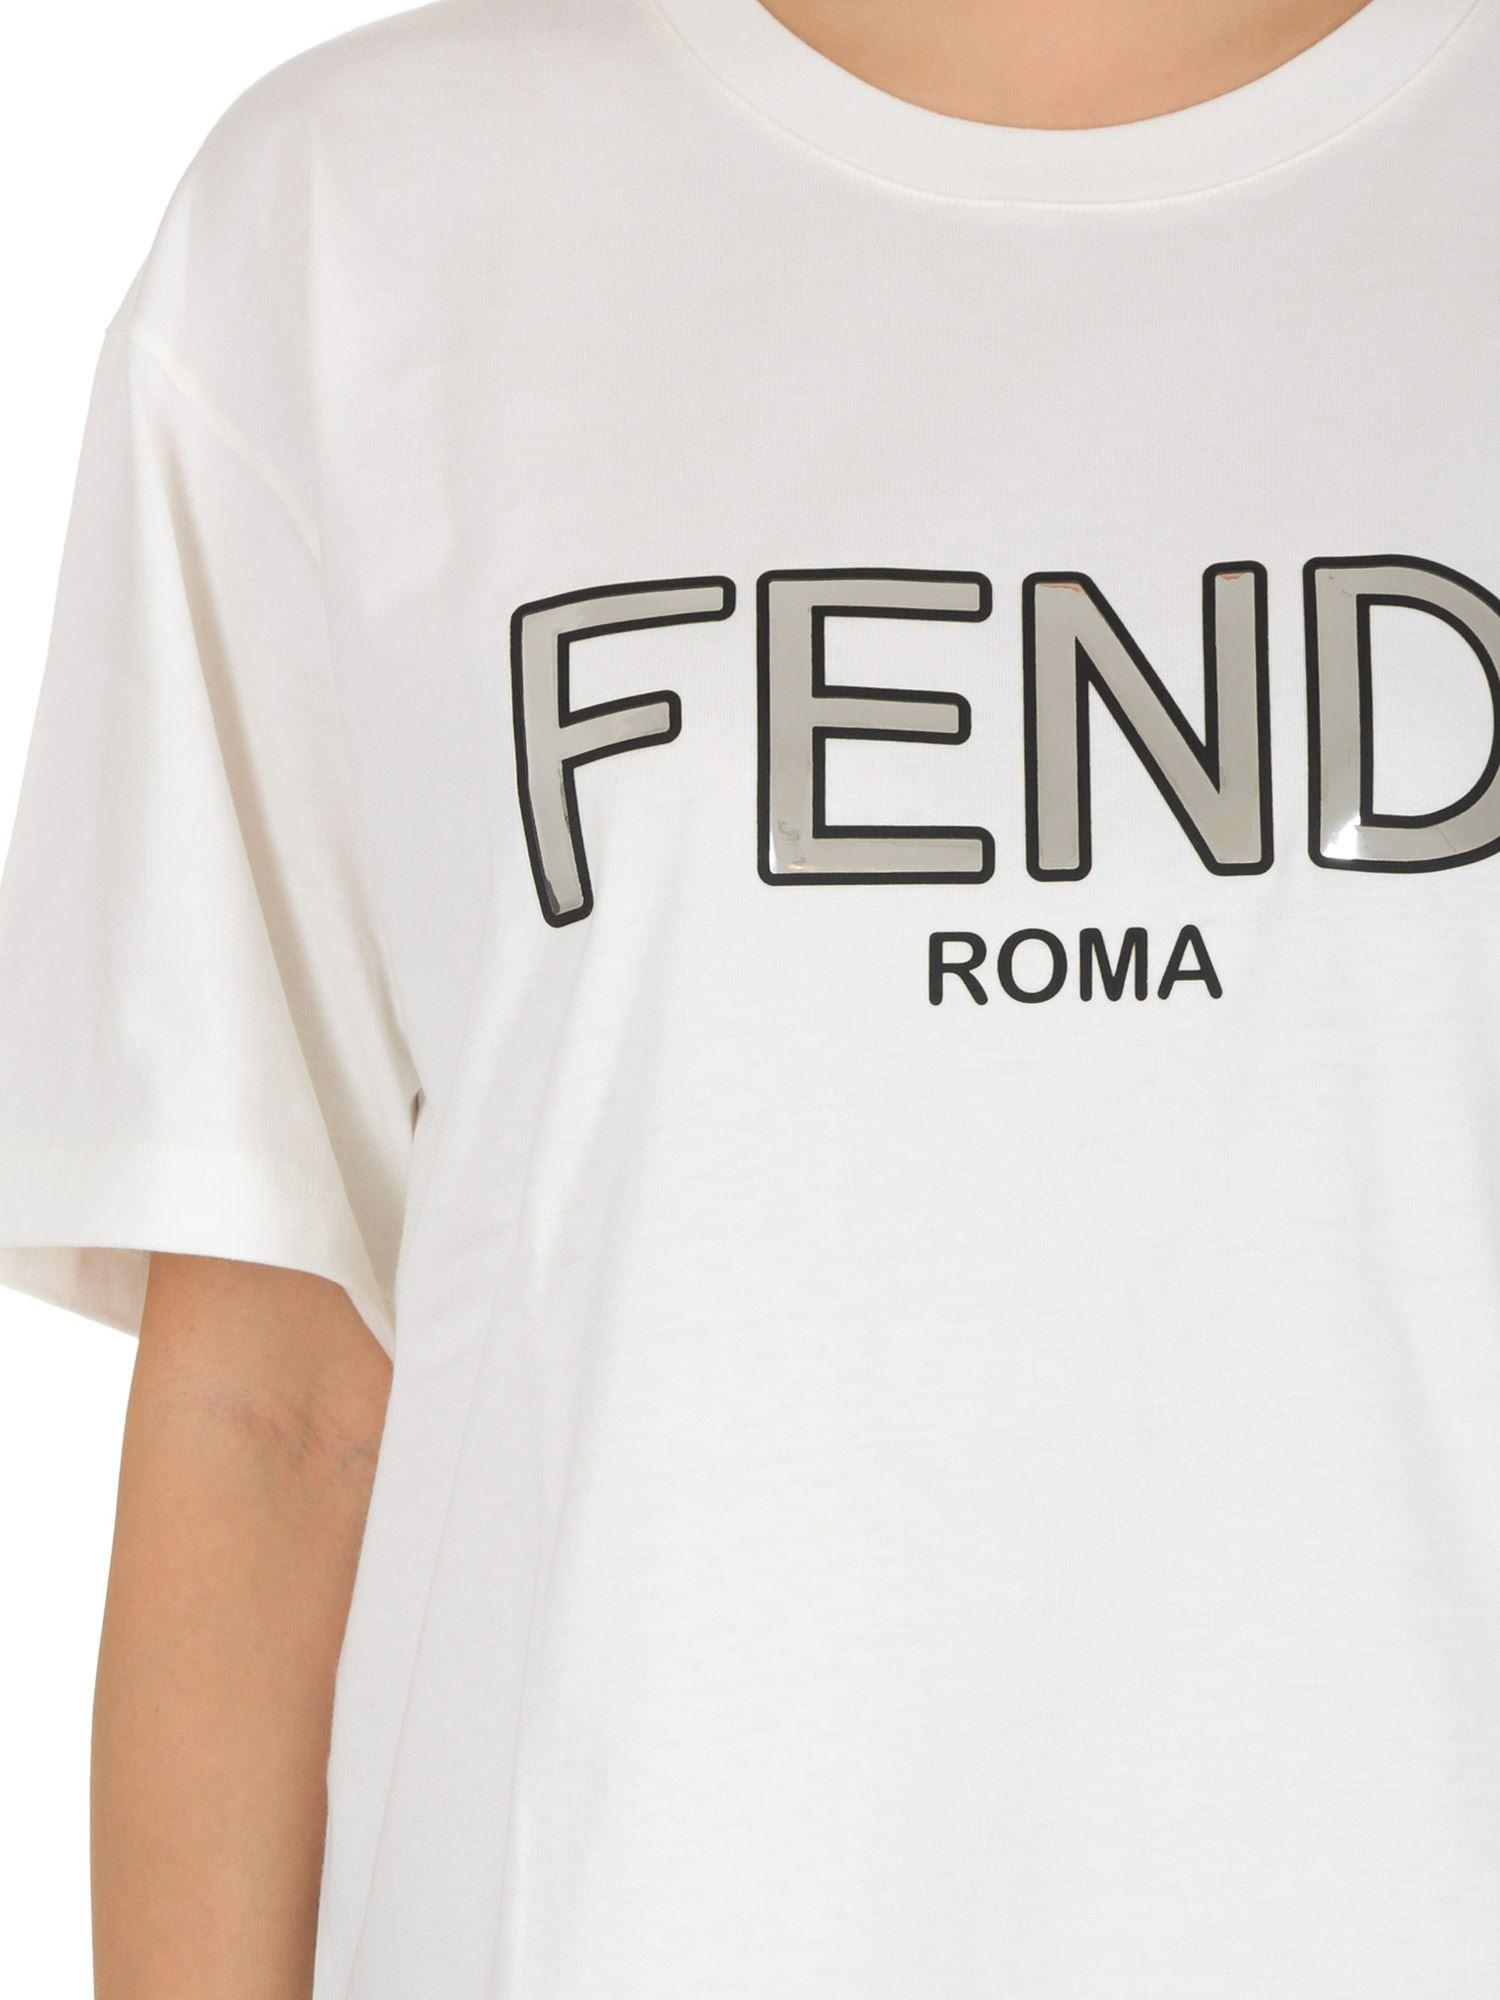 Fendi Cotton Silver Logo White T-shirt in Metallic - Lyst